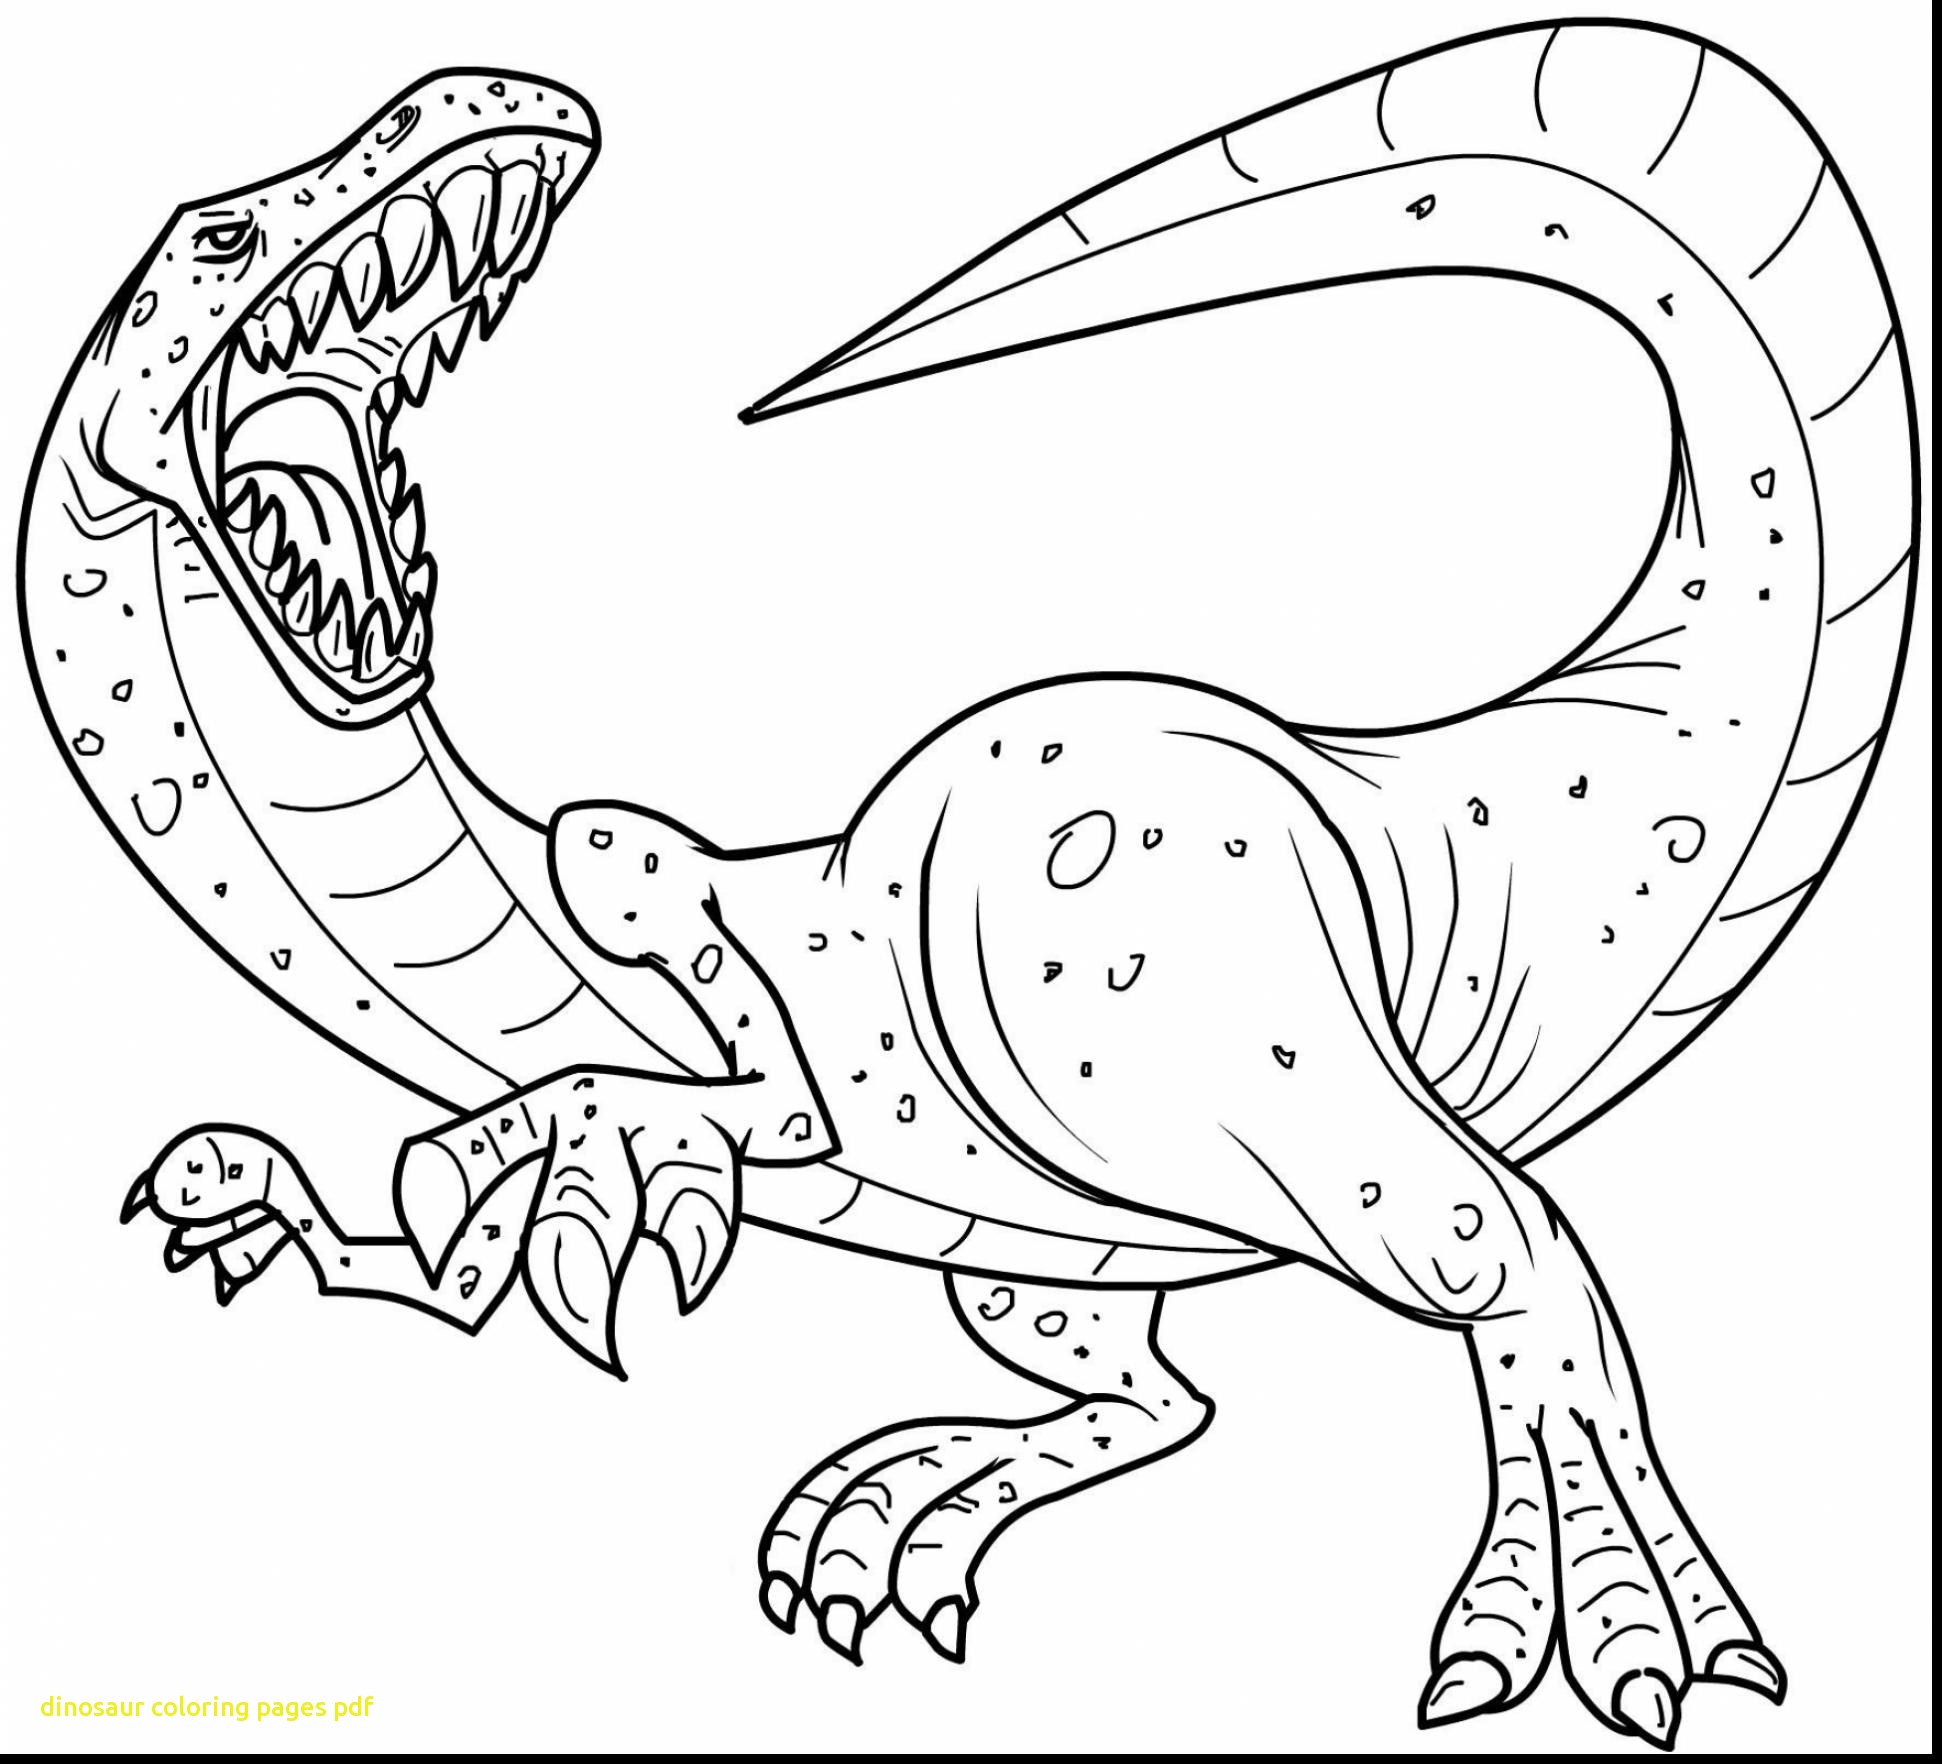 Dinosaur Coloring Pages Pdf At GetDrawings Free Download